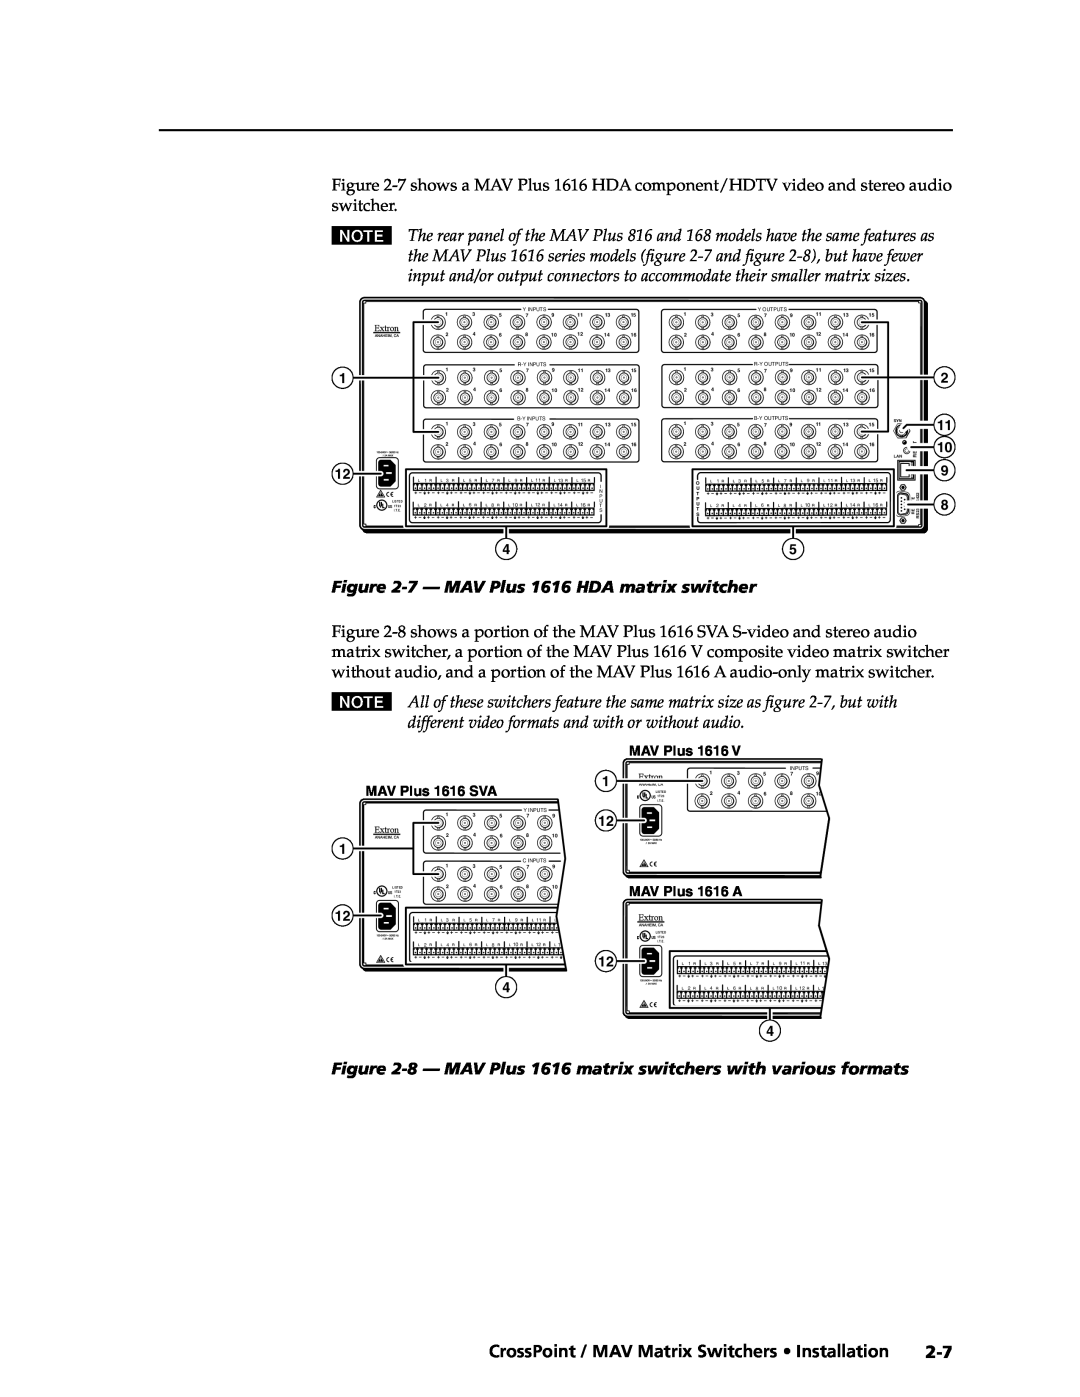 Extron electronic Ultra Series manual 7 - MAV Plus 1616 HDA matrix switcher, CrossPoint / MAV Matrix Switchers Installation 